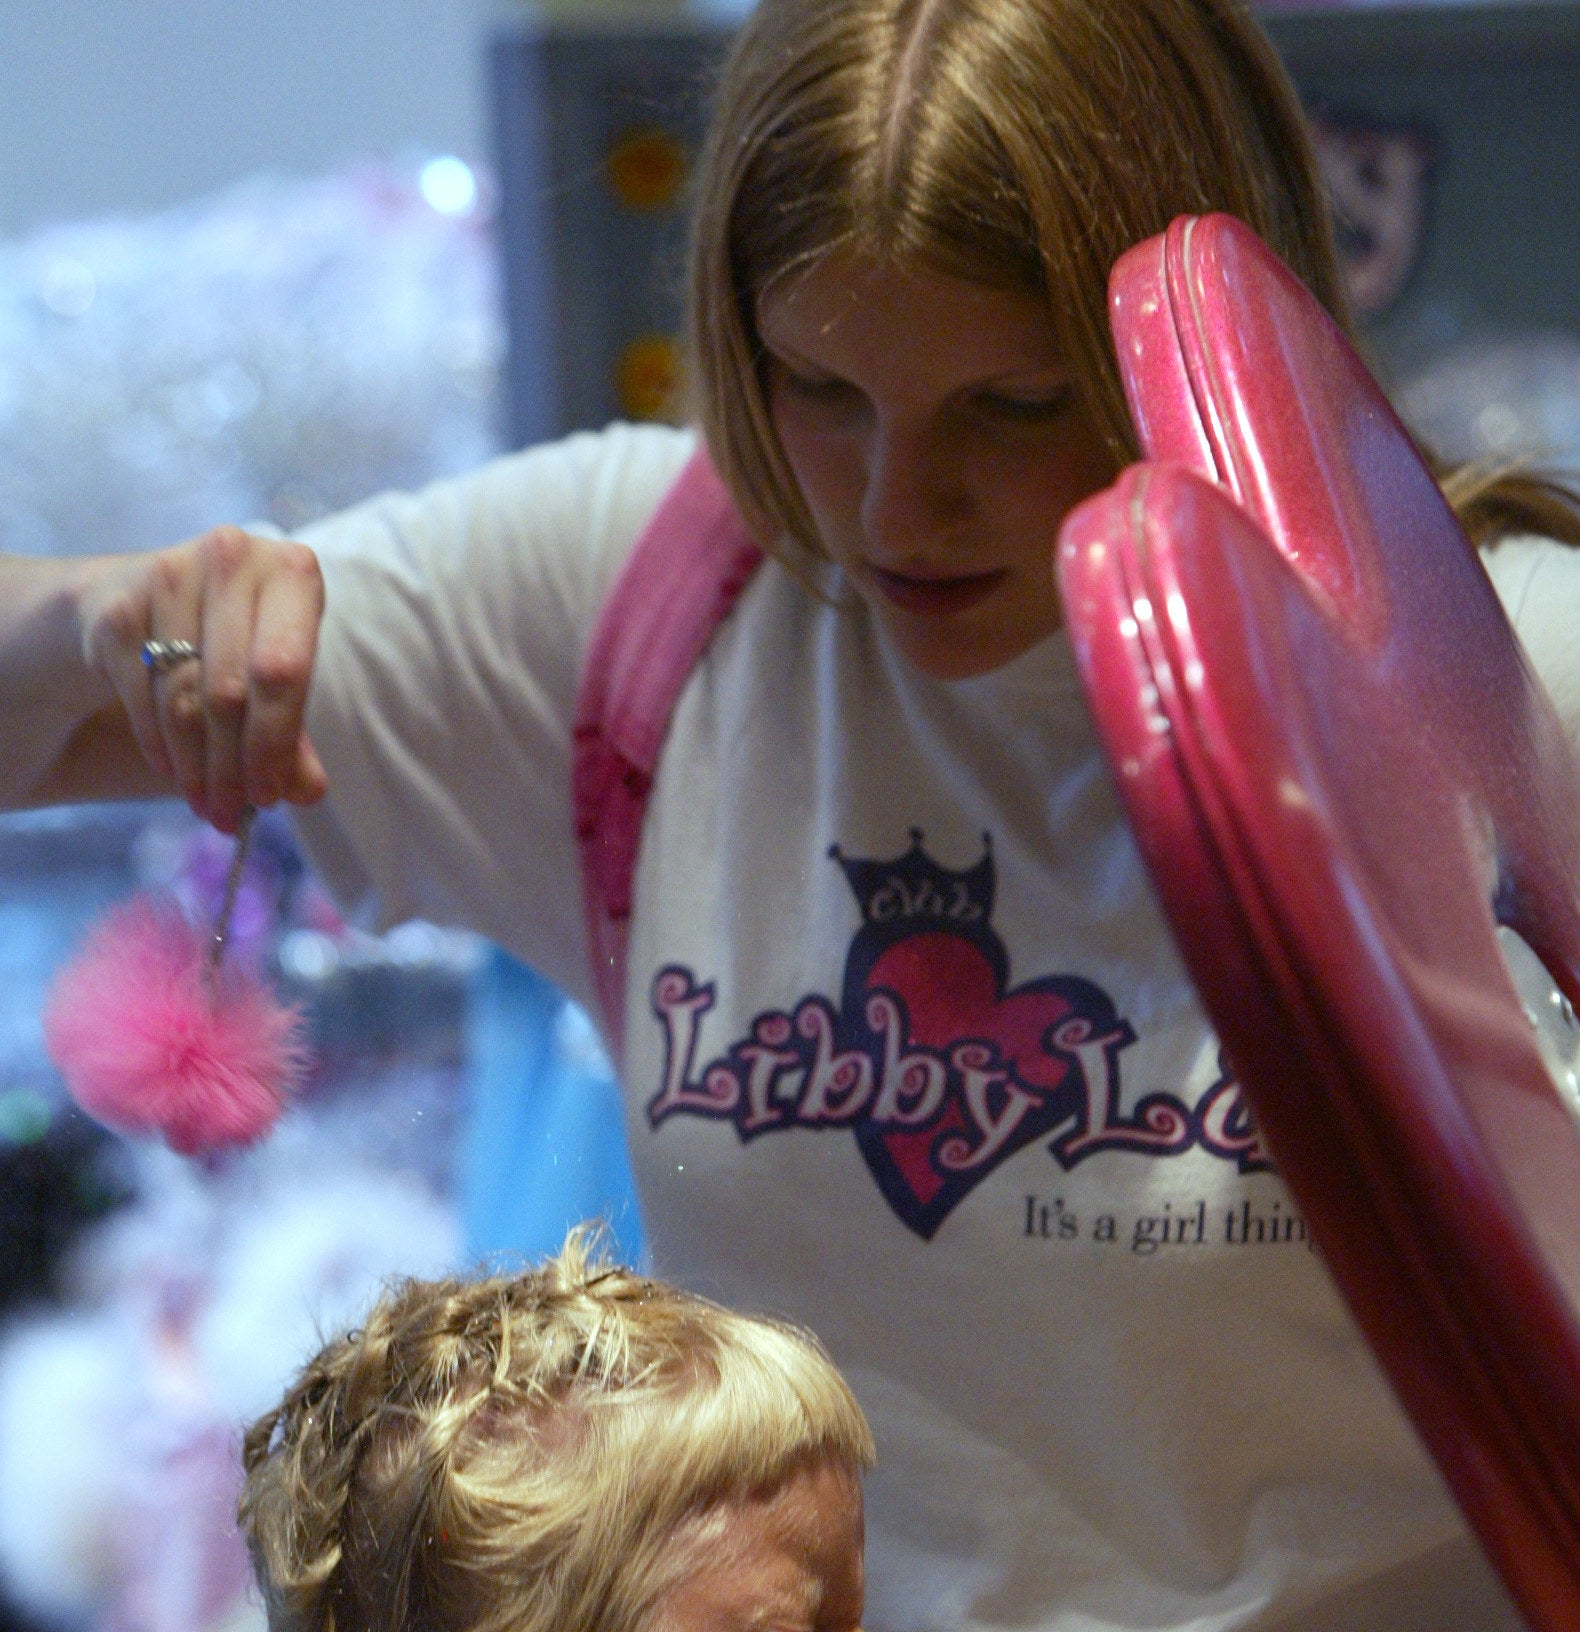 Libby Lu employee sprinkling glitter into a little girls hair.